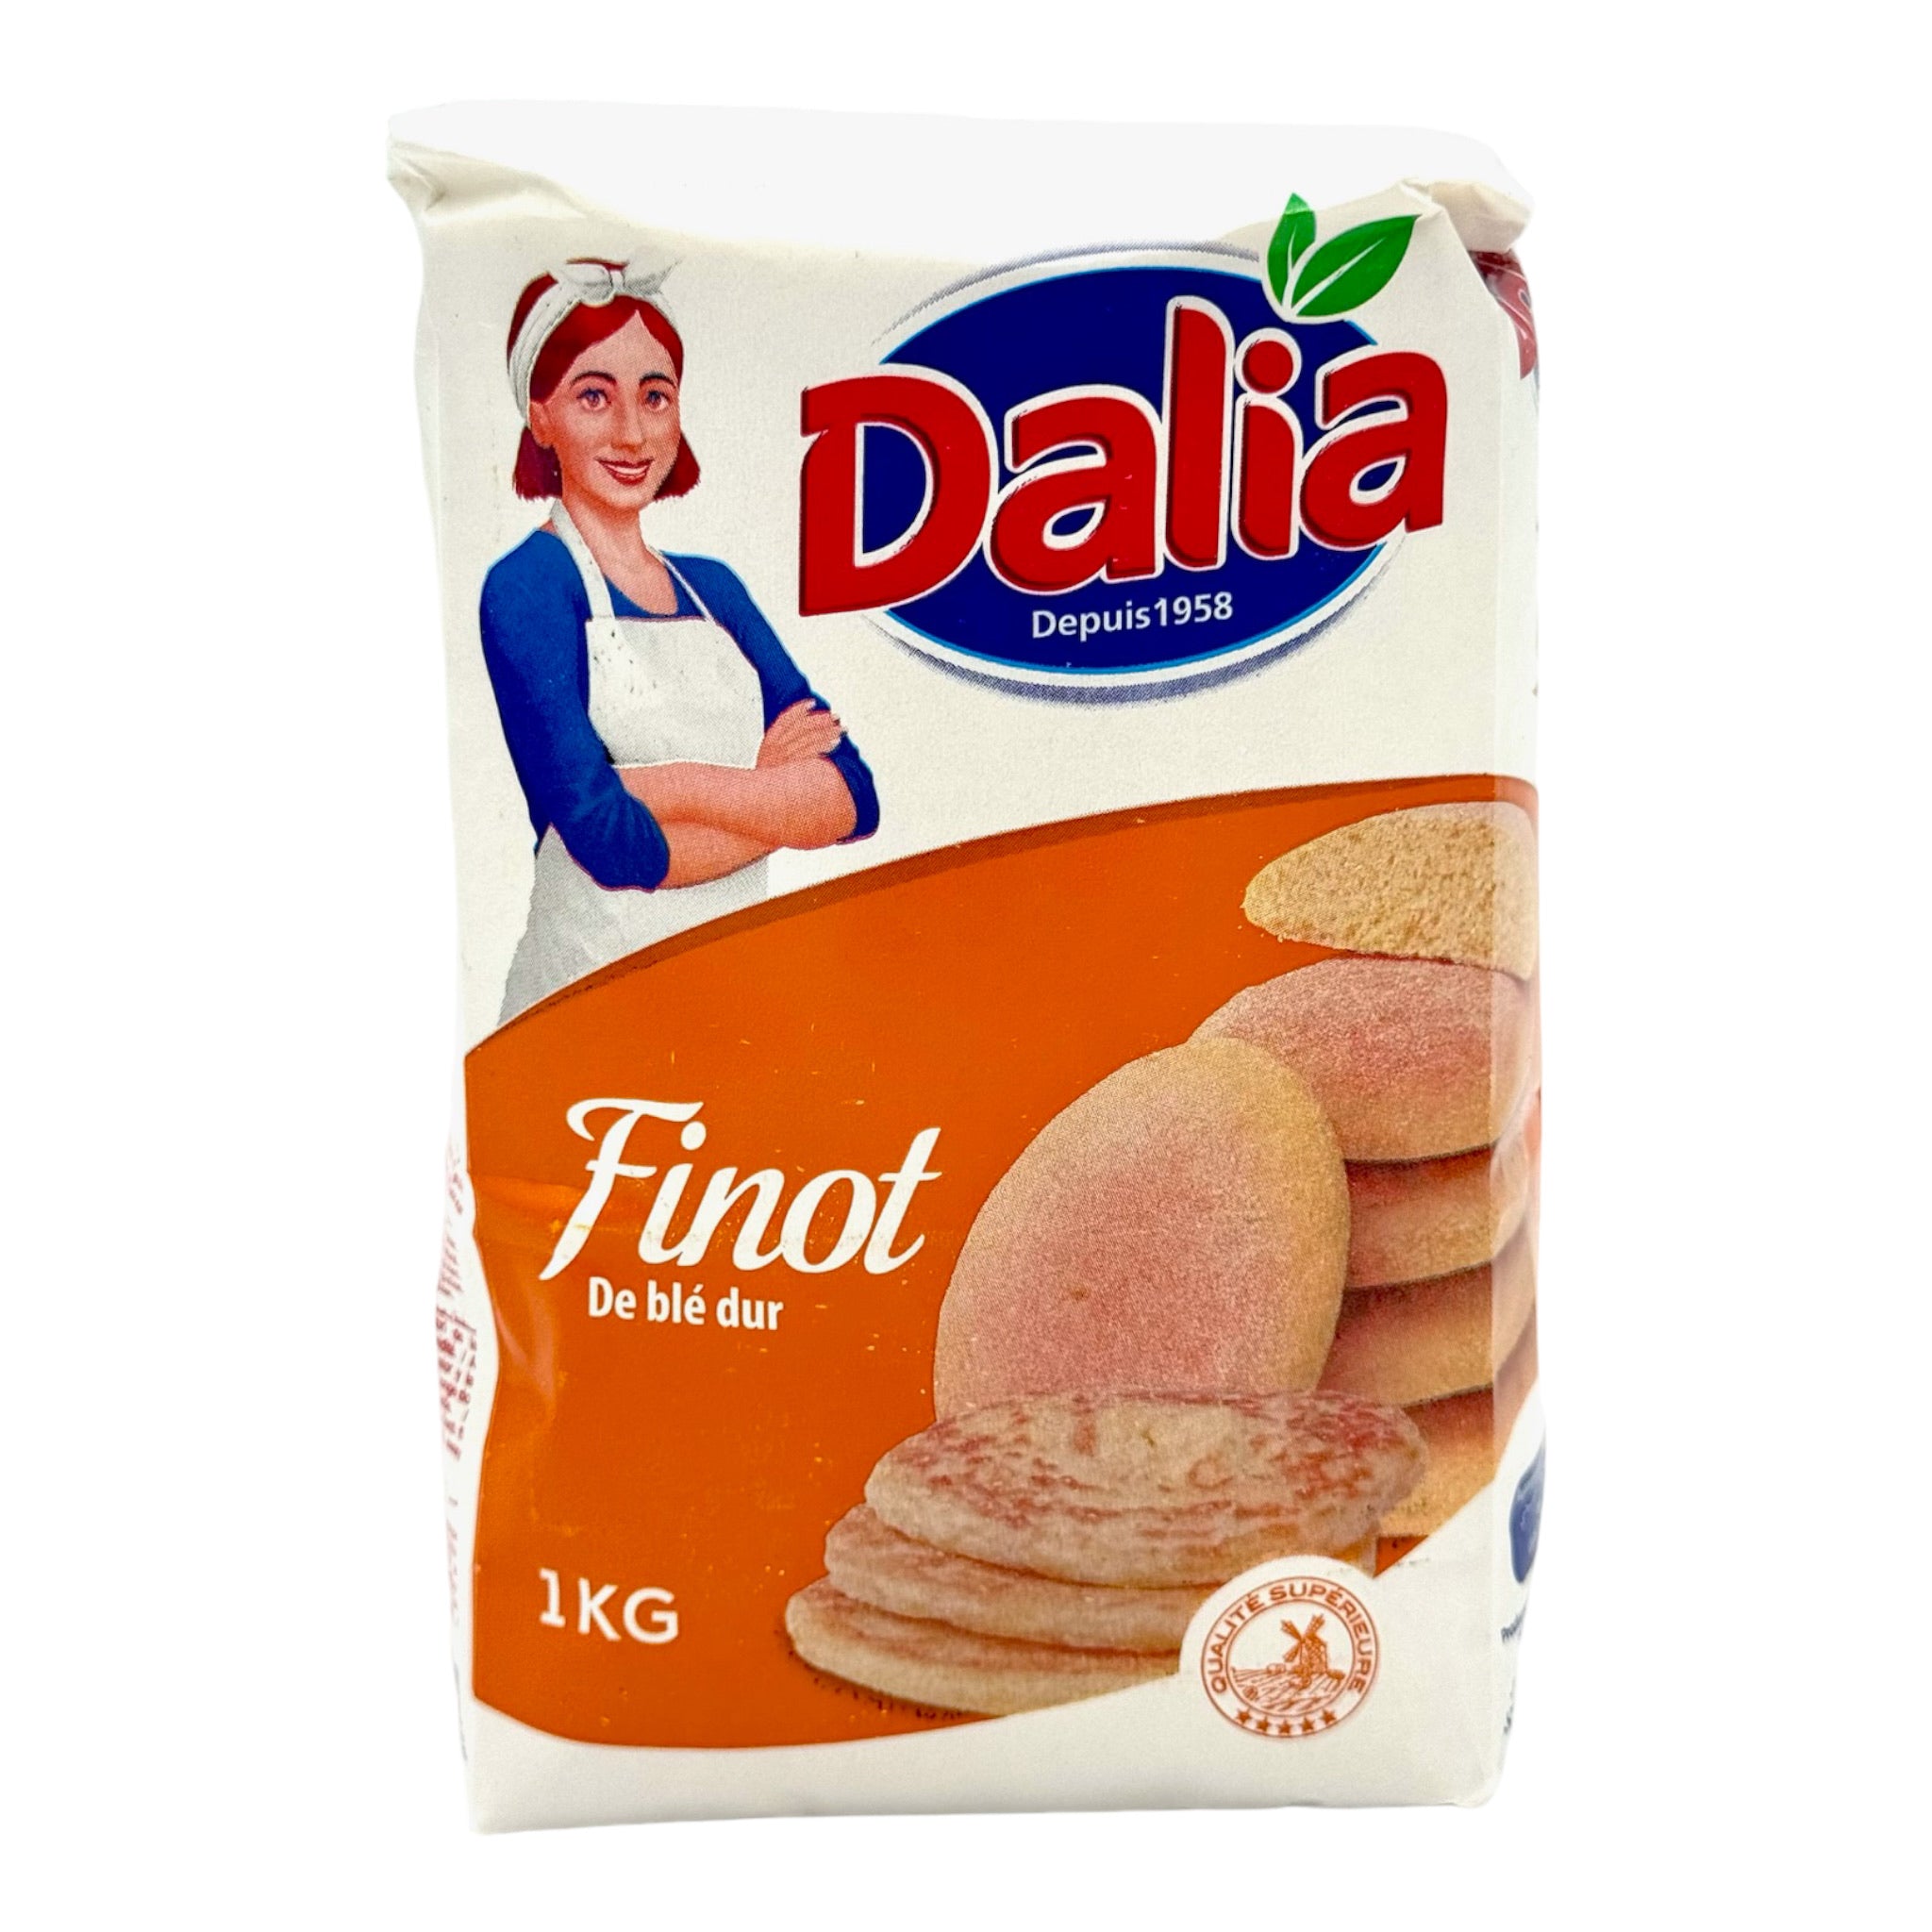 dalia finot or extra fine semolina flour from morocco to make khobz